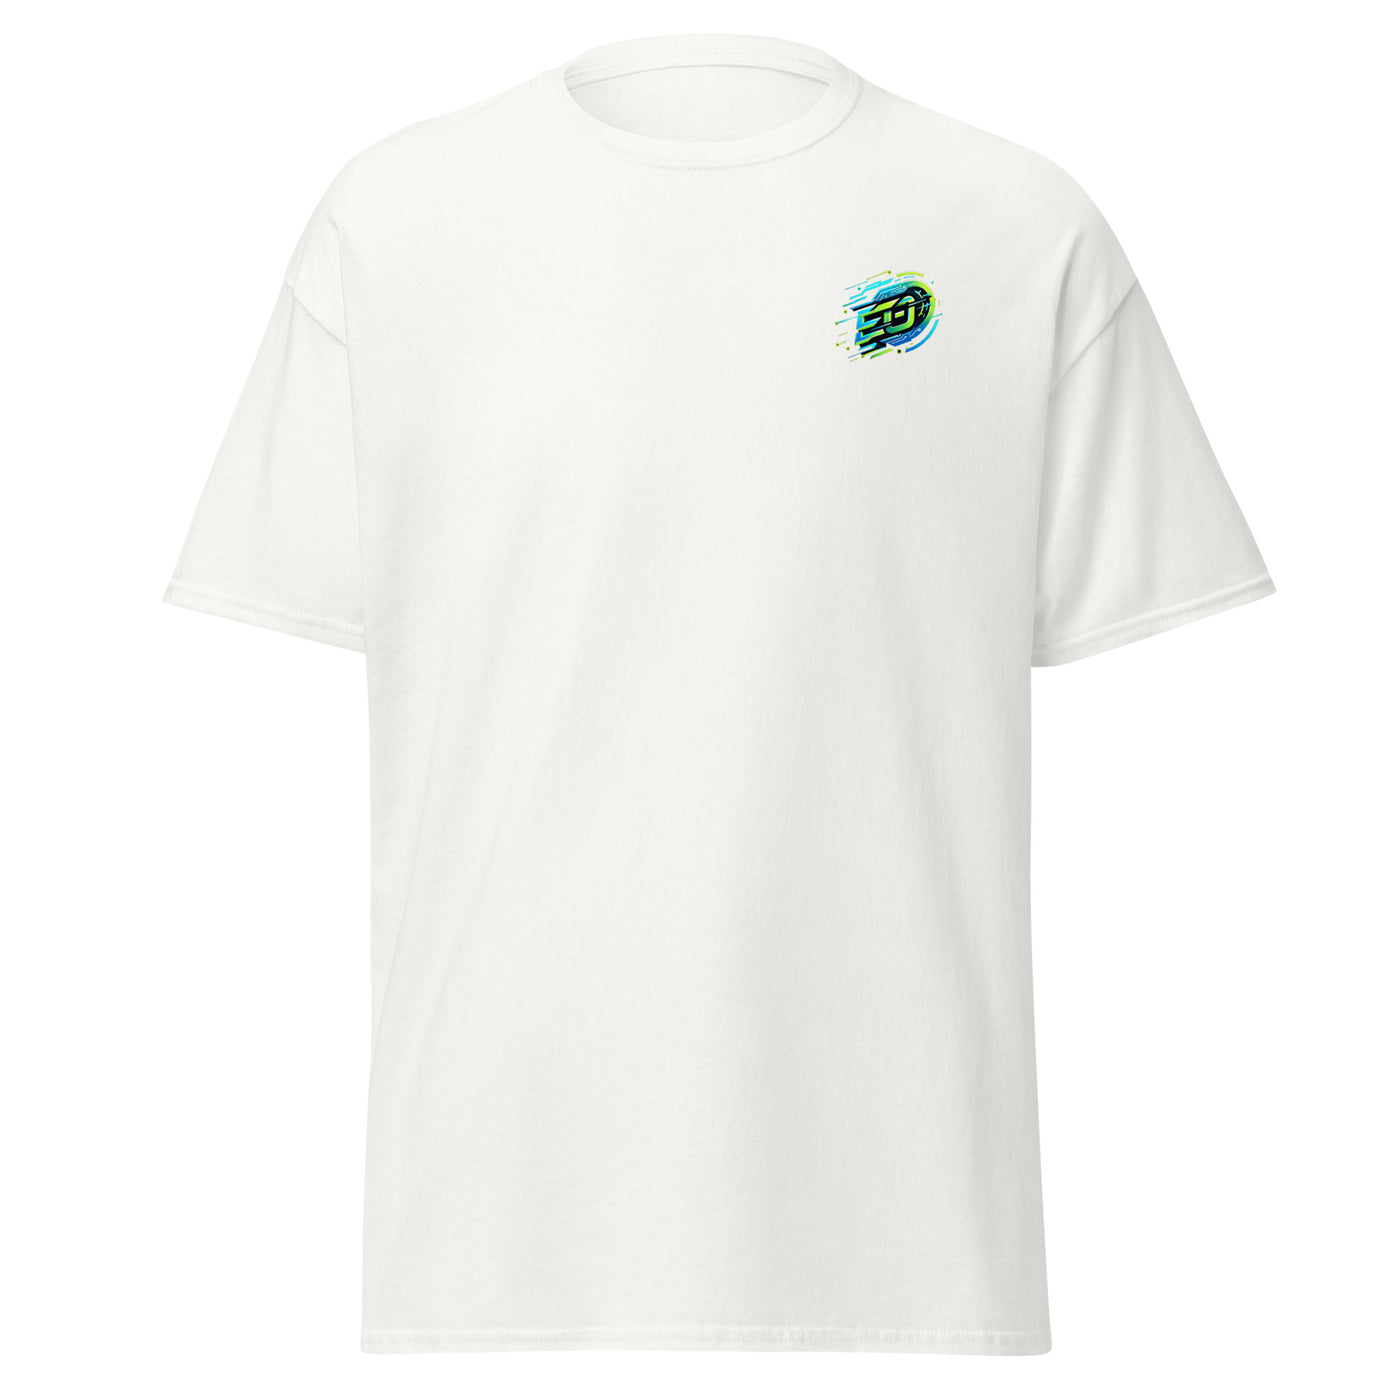 Project EO Esports Unisex T-Shirt